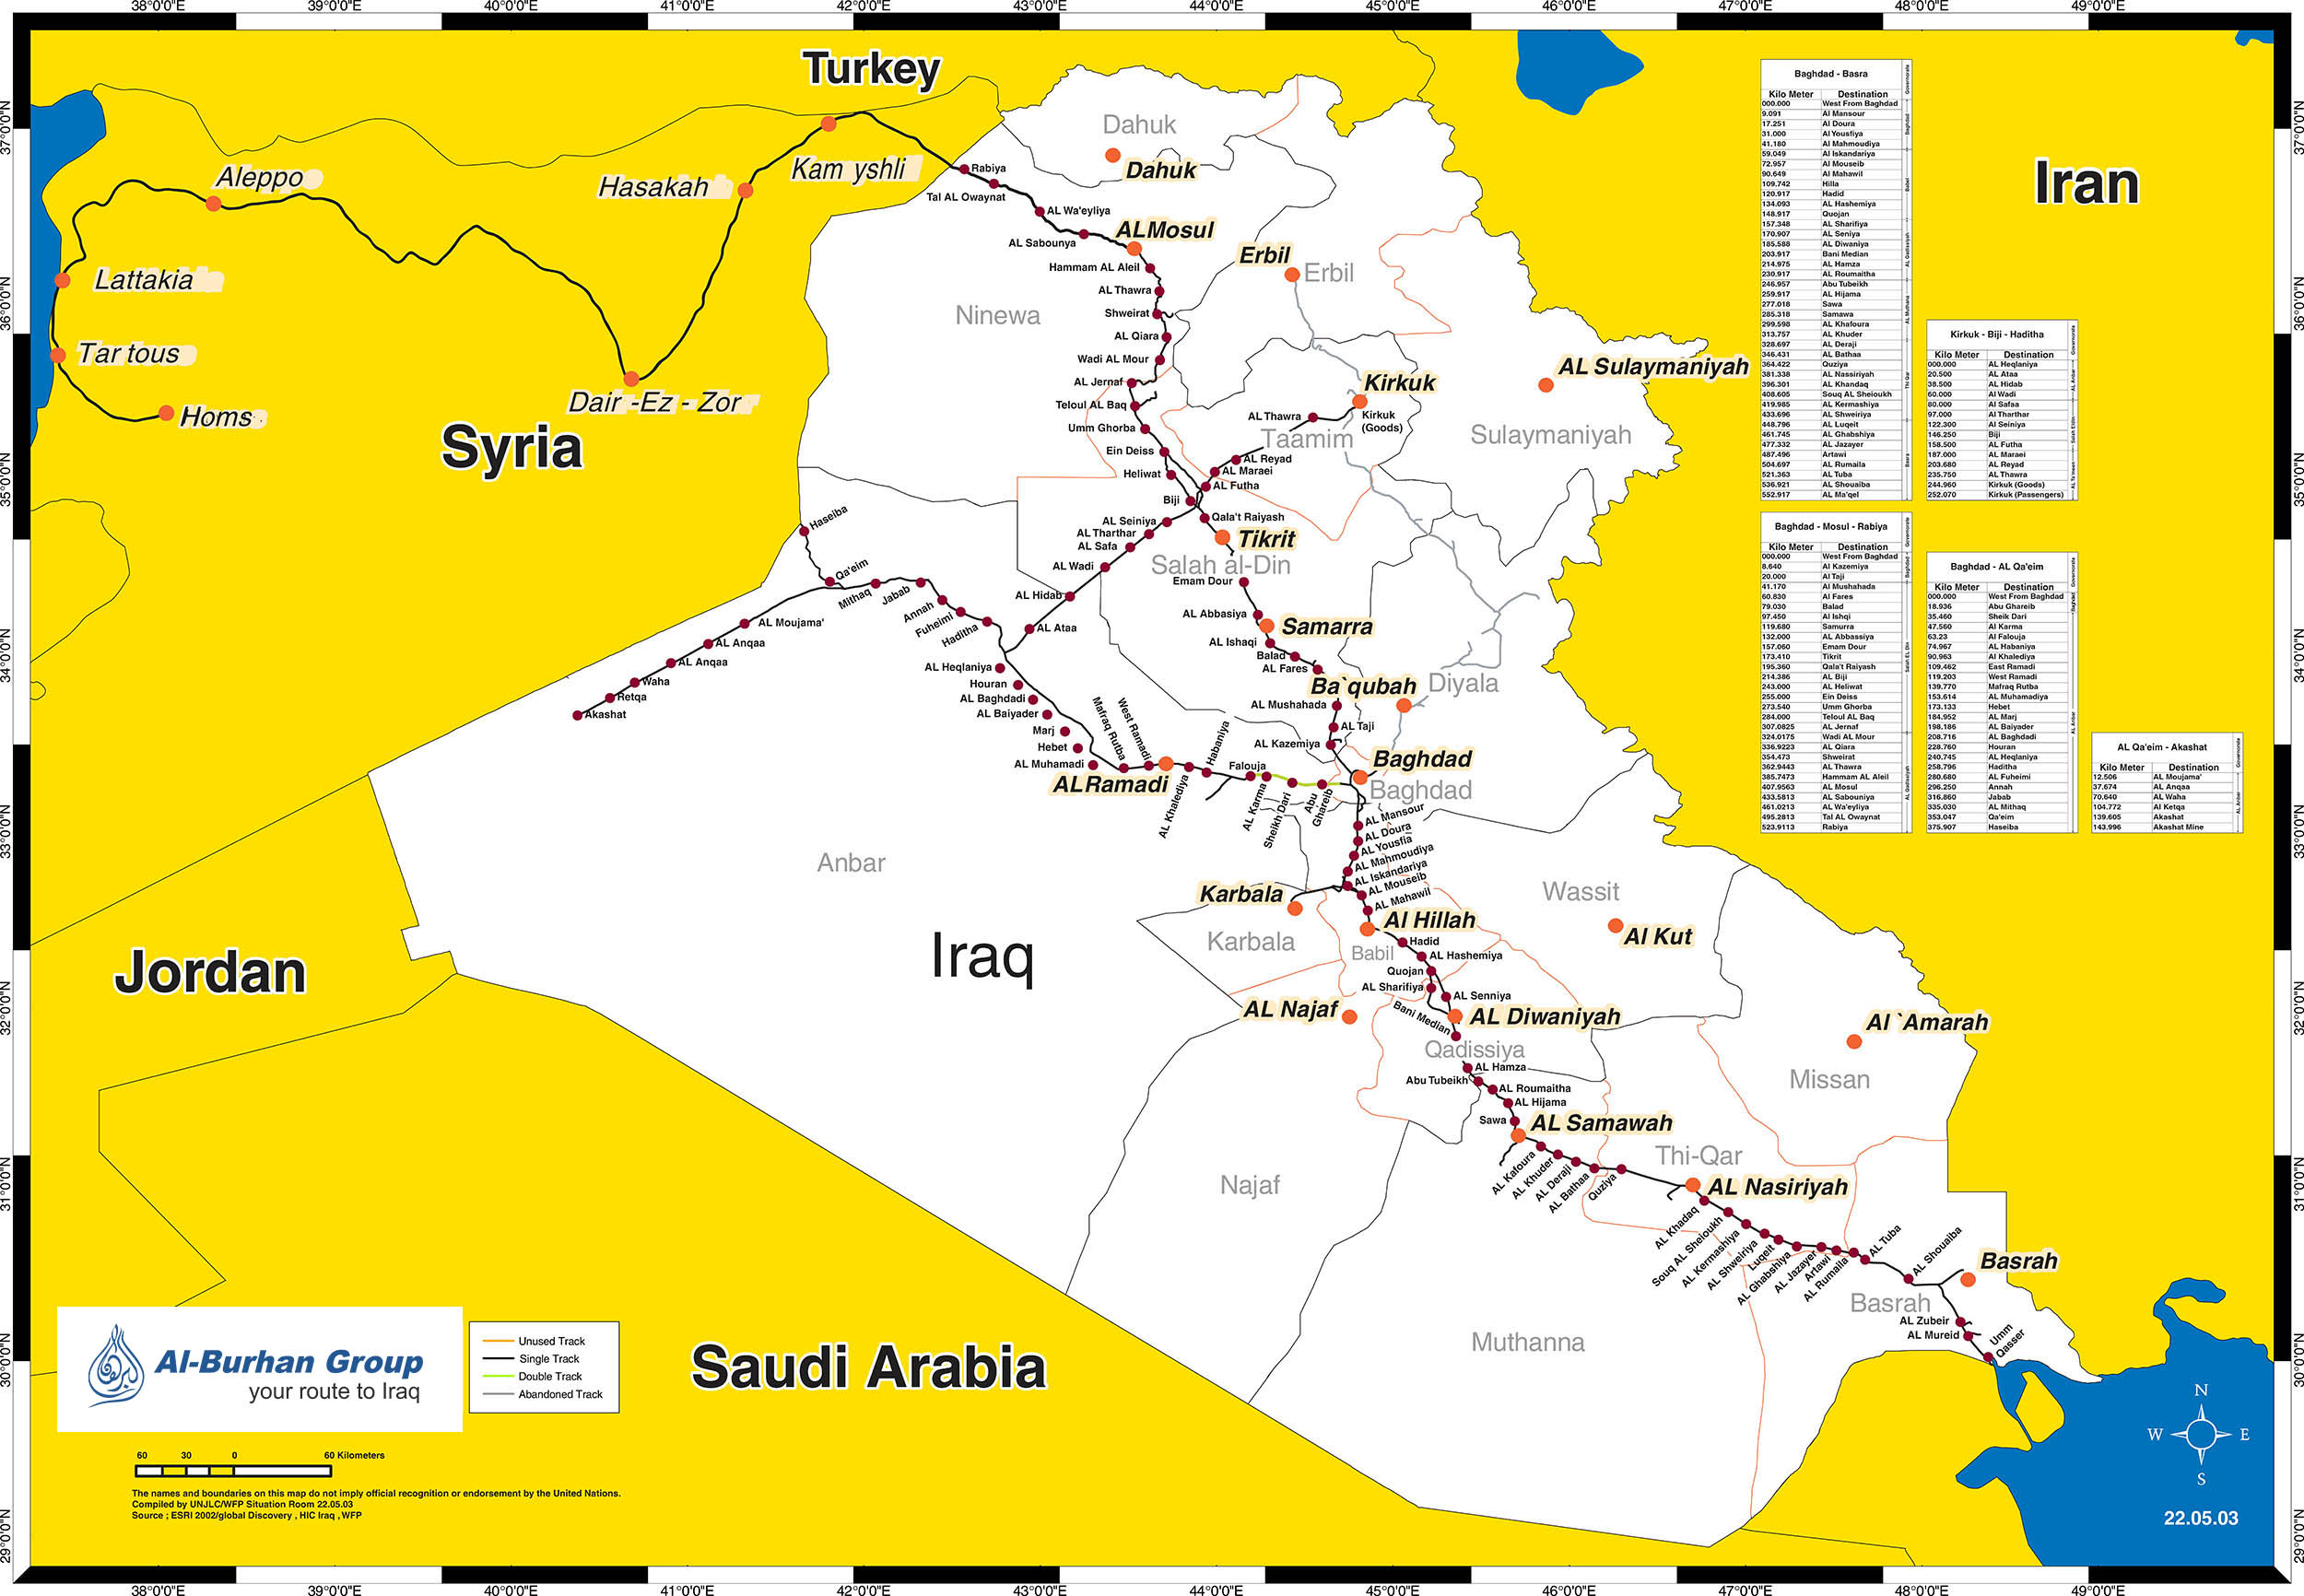 Iraqi Railway Networks - Al-Burhan Group